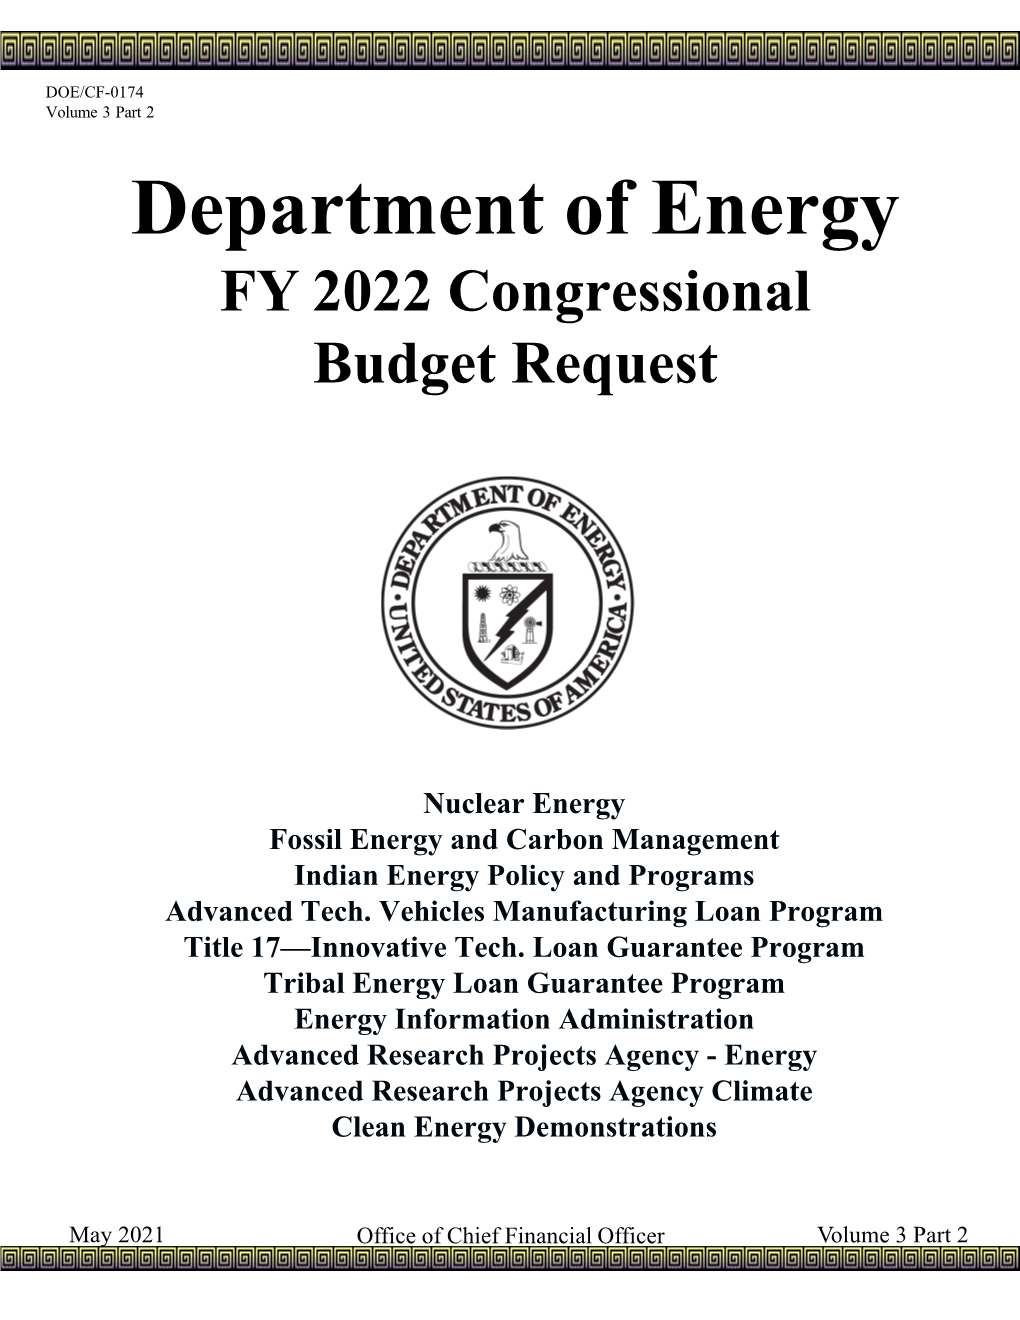 DOE FY 2022 Budget Request Volume